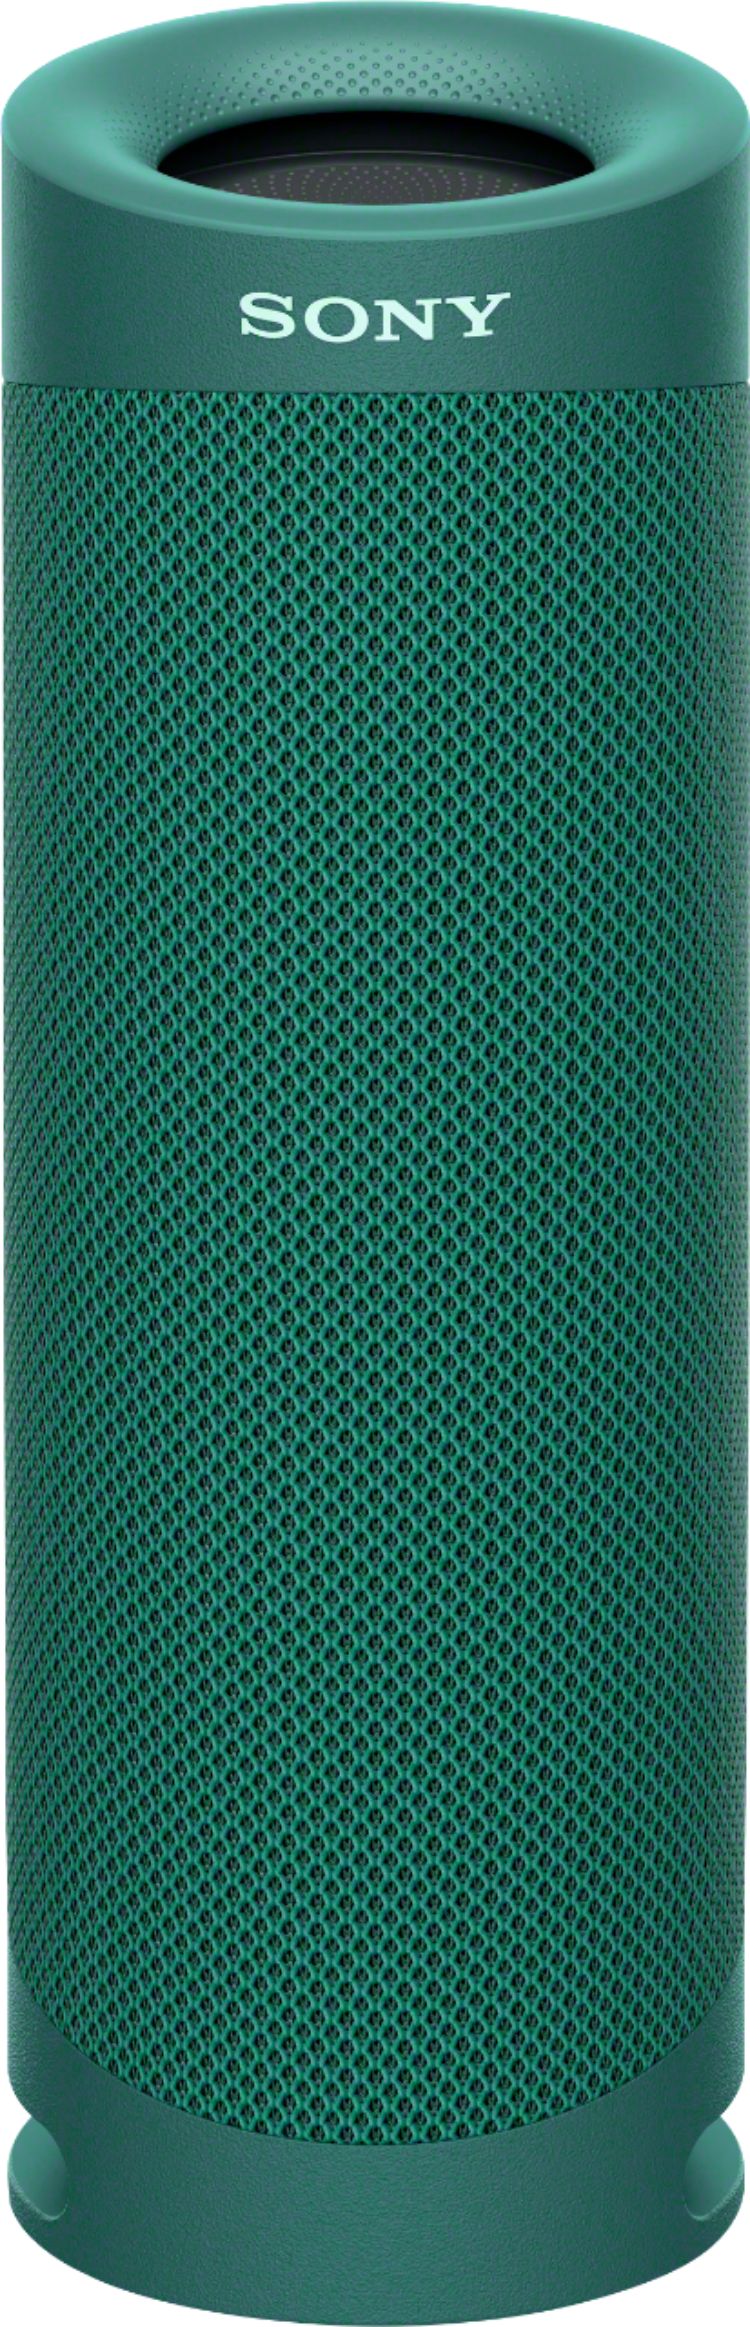 Sony SRS-XB23 Portable Bluetooth Speaker Olive Green SRSXB23/G